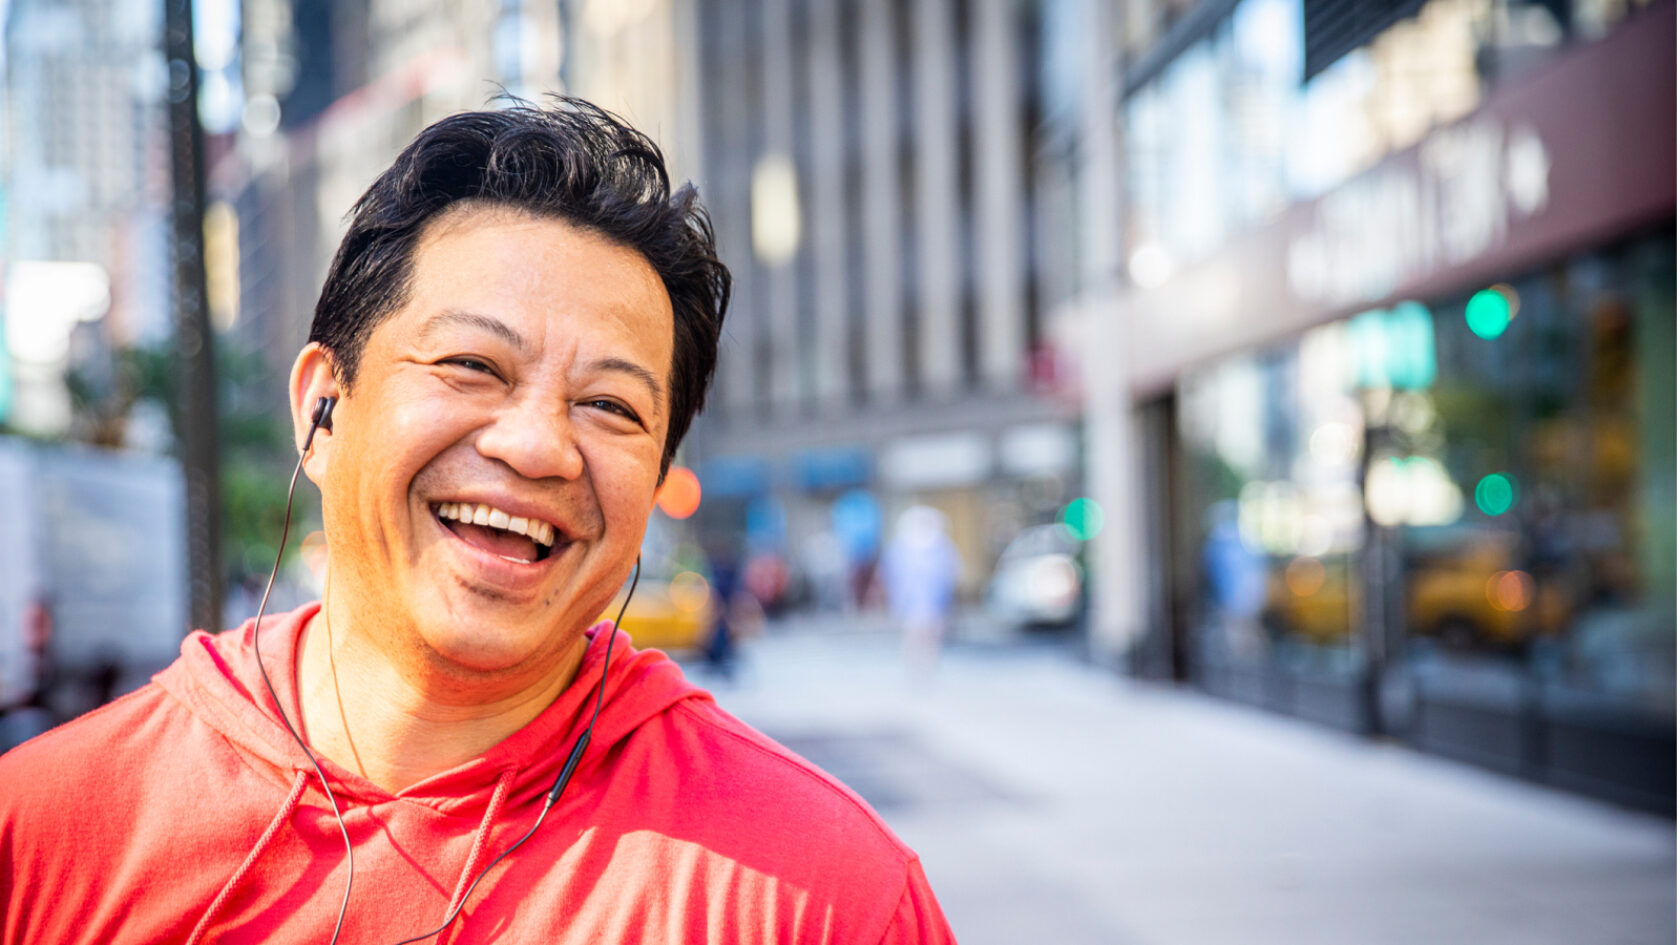 A man smiles as he walks down a city block.